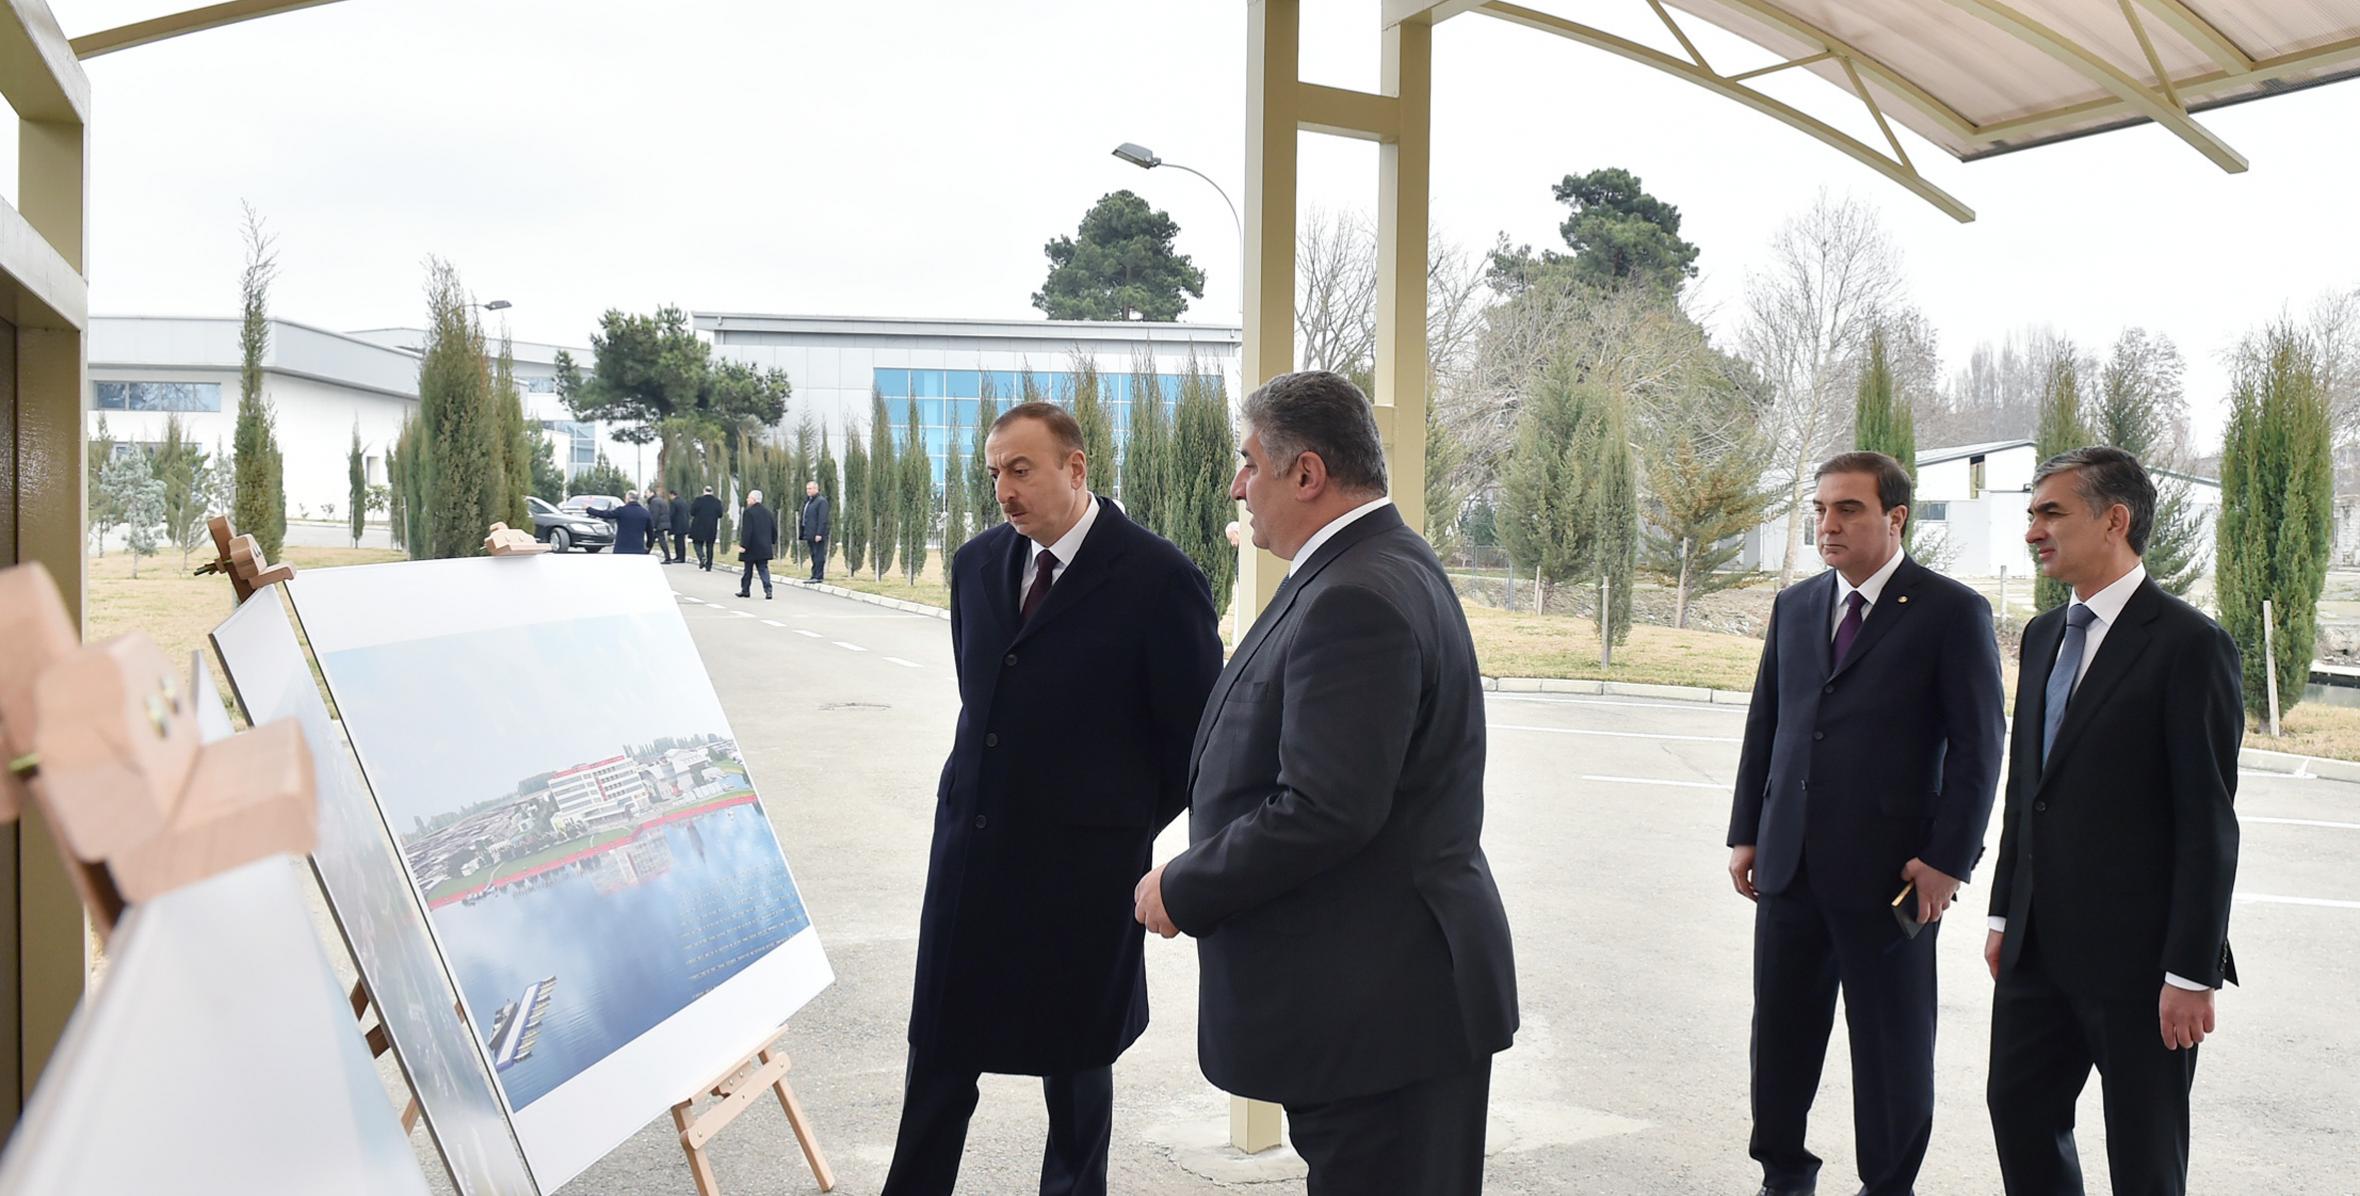 Ilham Aliyev visited Kur Olympic Training and Sports Center in Mingachevir